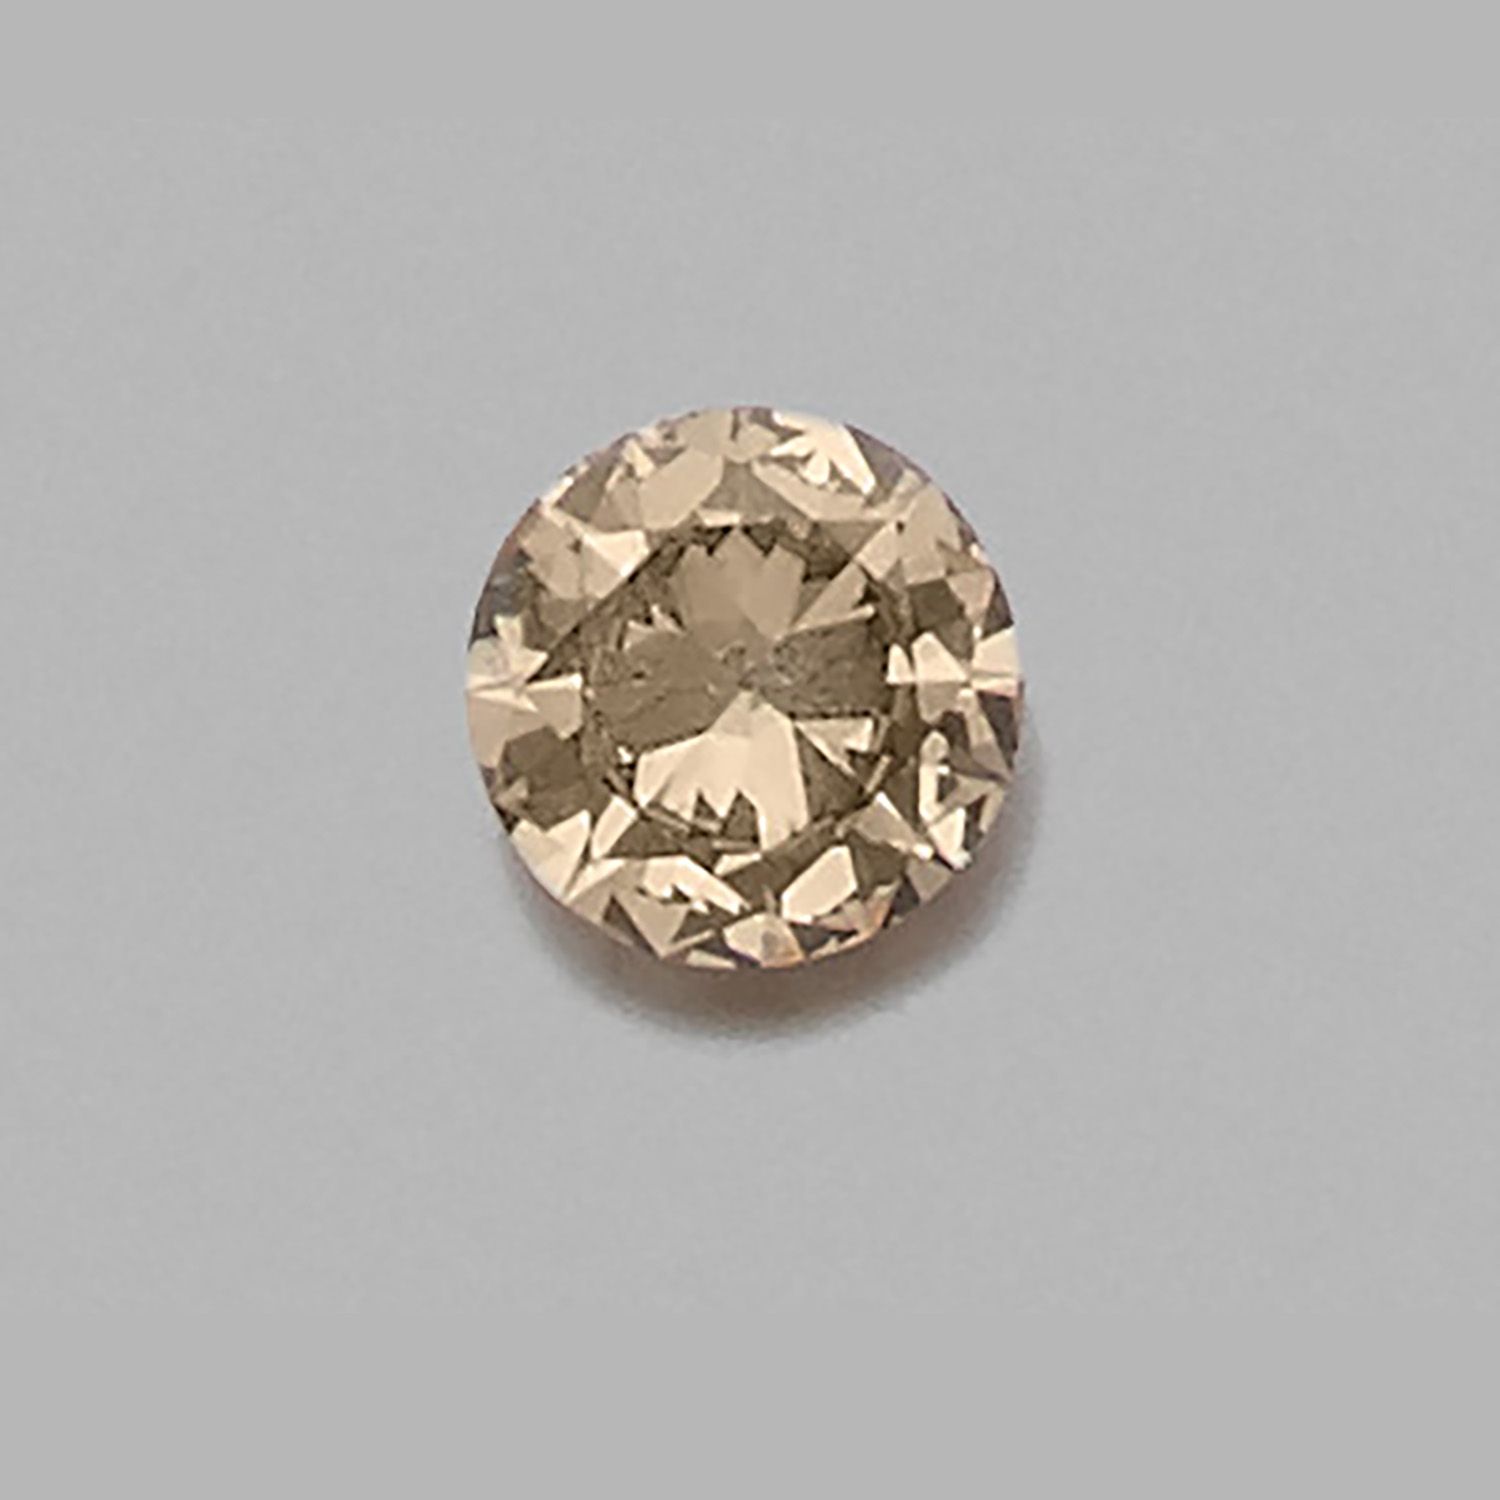 Null DIAMANT 2,06 CARAT FANCY BROWNISH YELLOW

Diamant taille brillant sur papie&hellip;